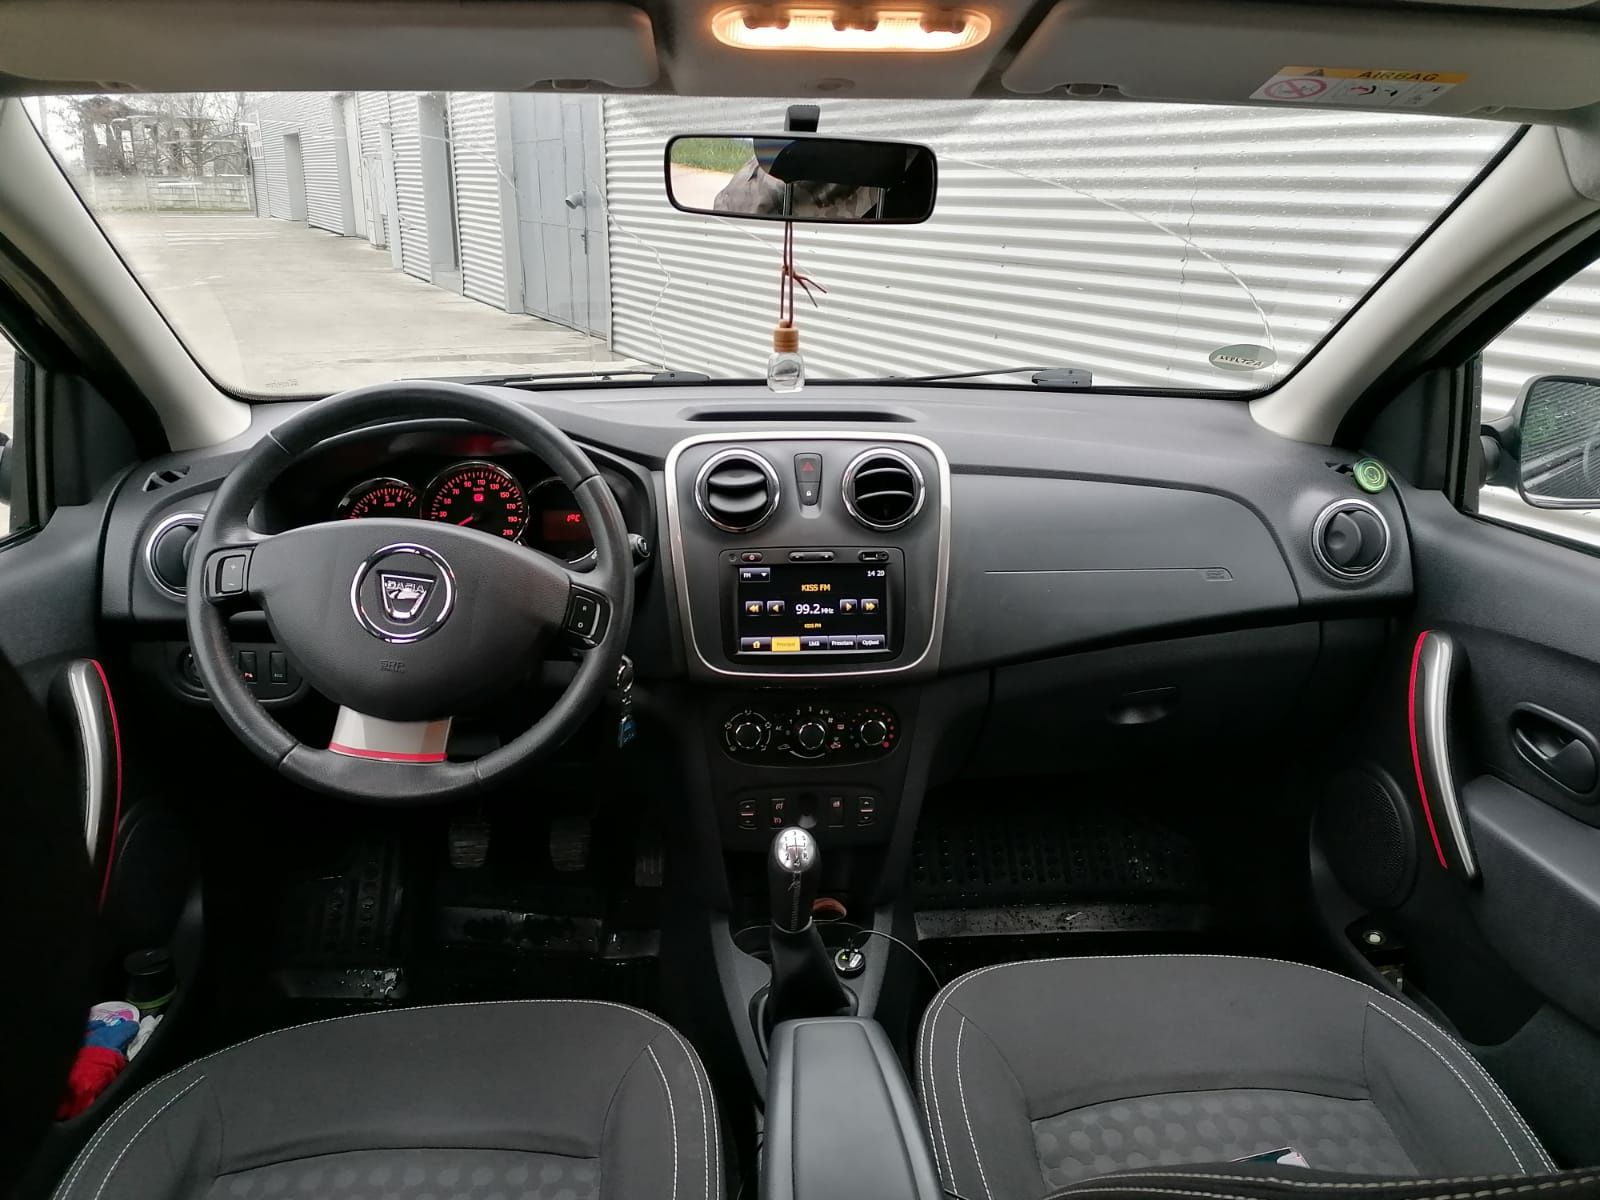 Dacia Logan MCV, 1.5 DIESEL euro 5!!!